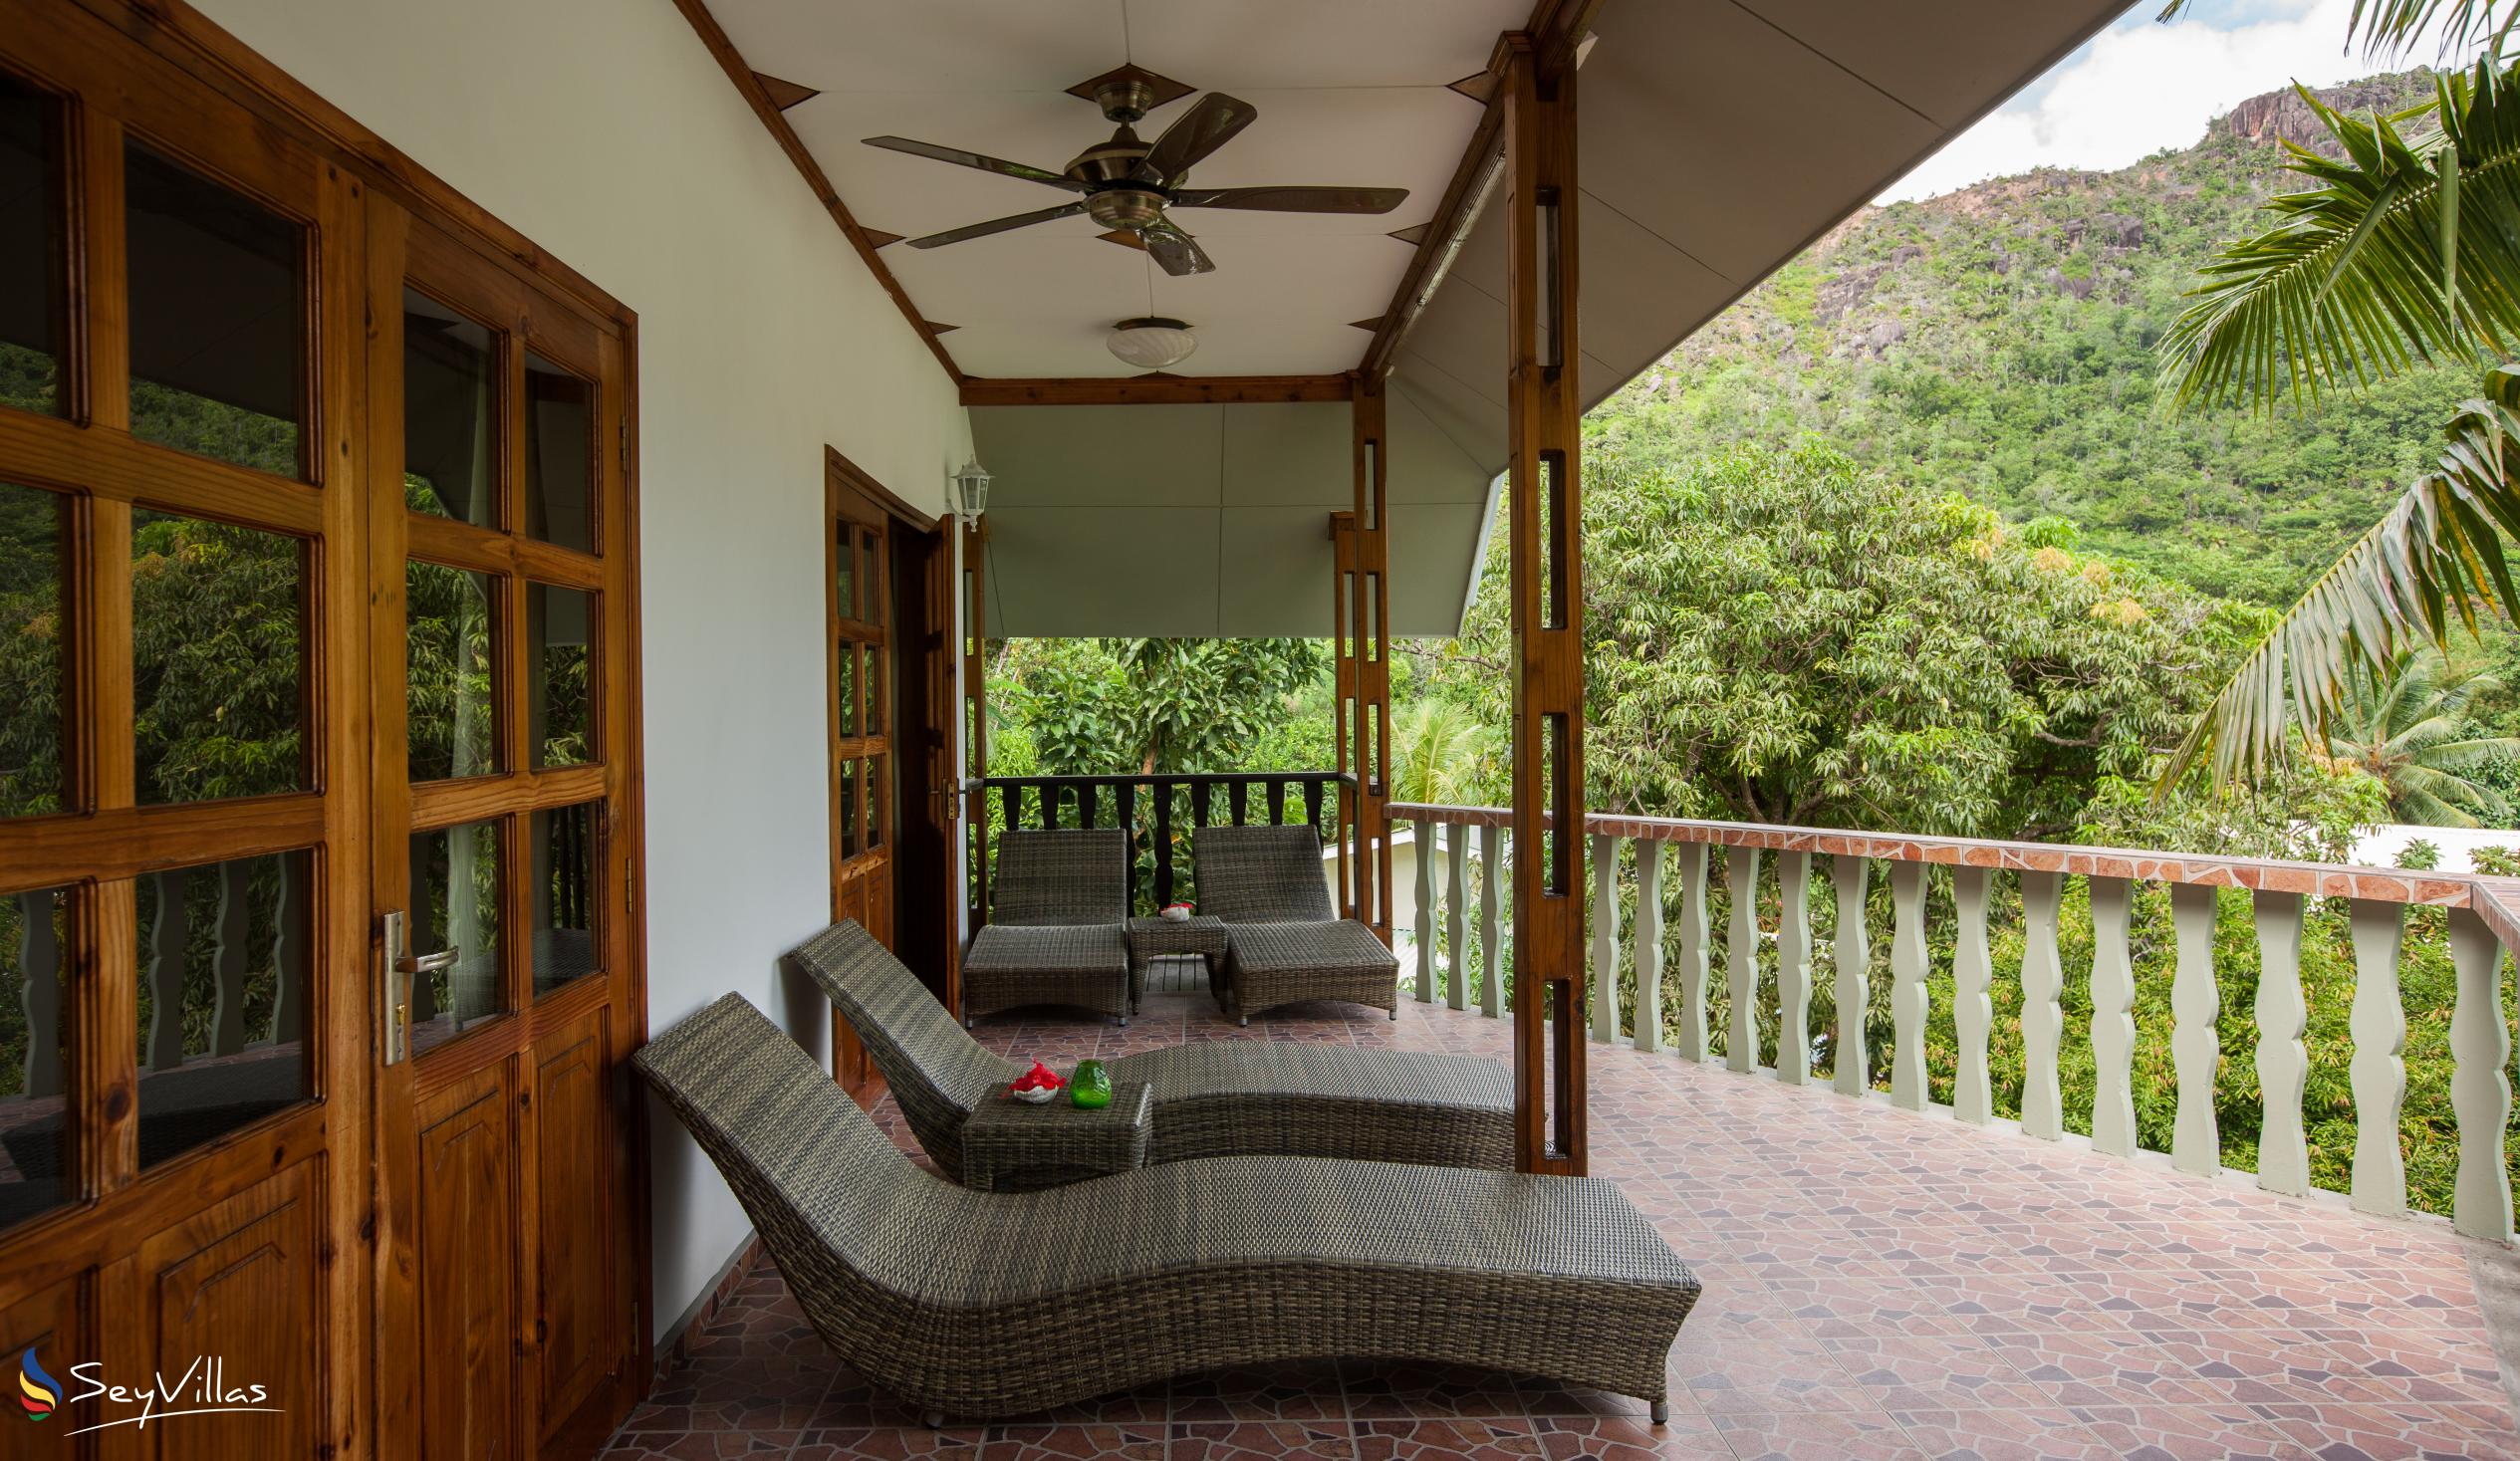 Foto 78: Sea View Lodge - Villa grande su palafitte - Praslin (Seychelles)